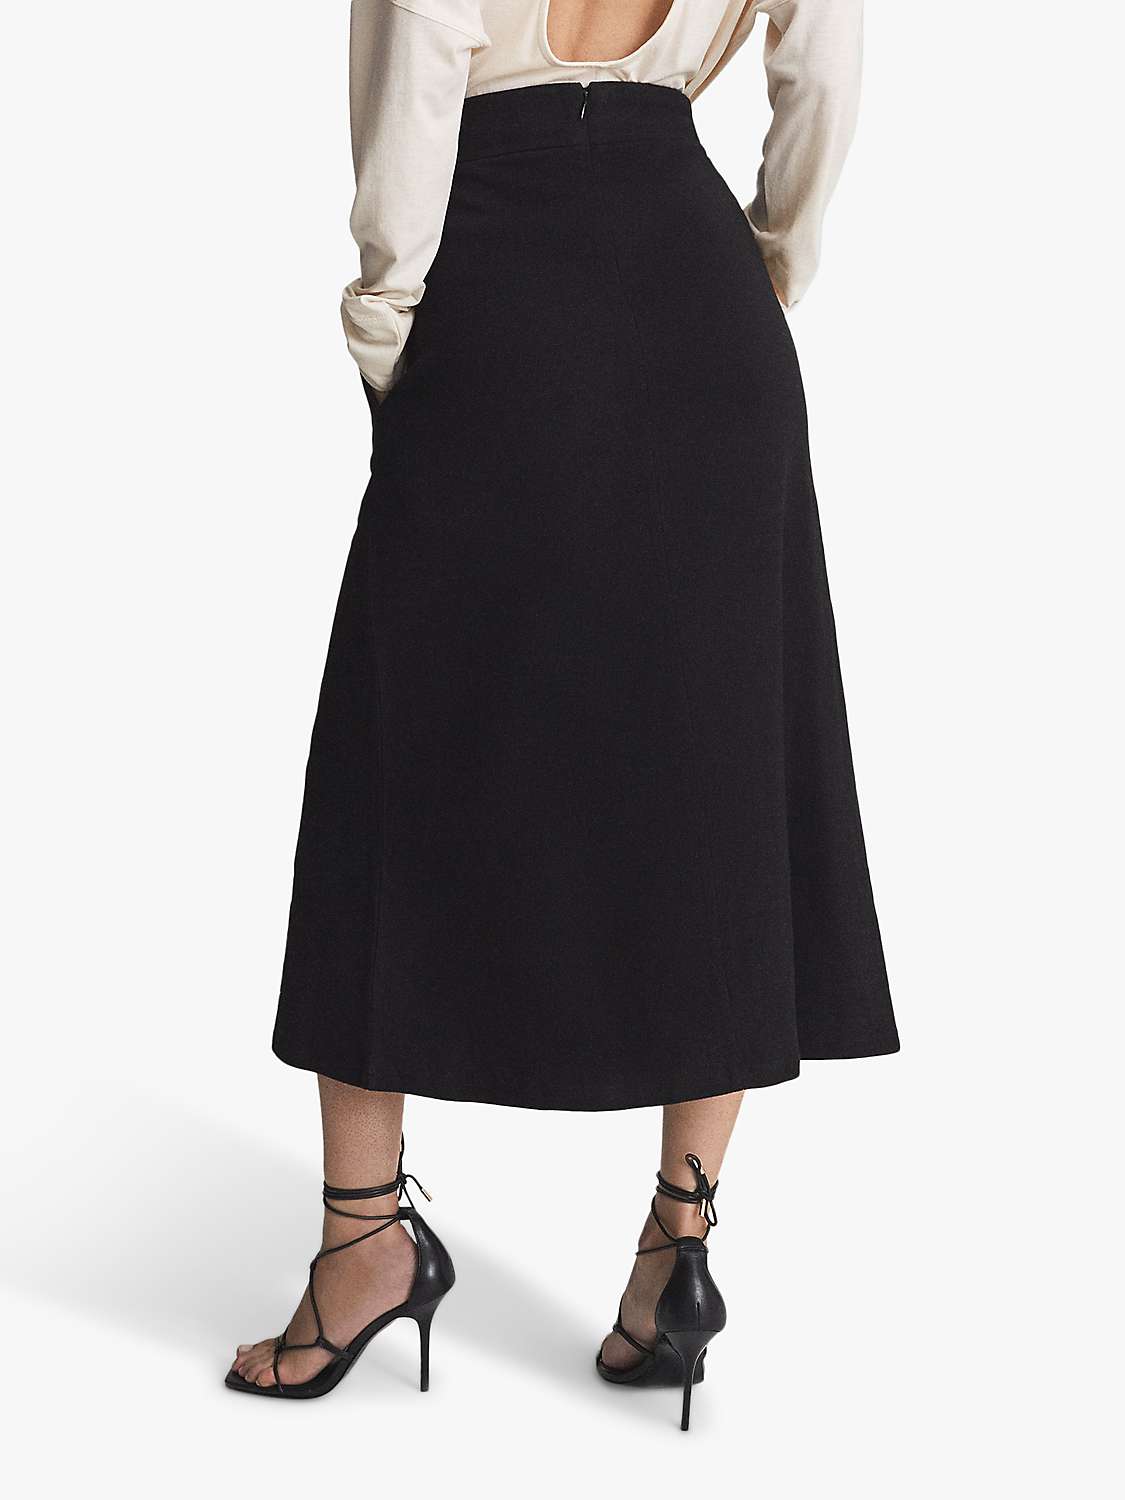 Reiss Lyla Contrast Tie Waist Midi Skirt, Black at John Lewis & Partners